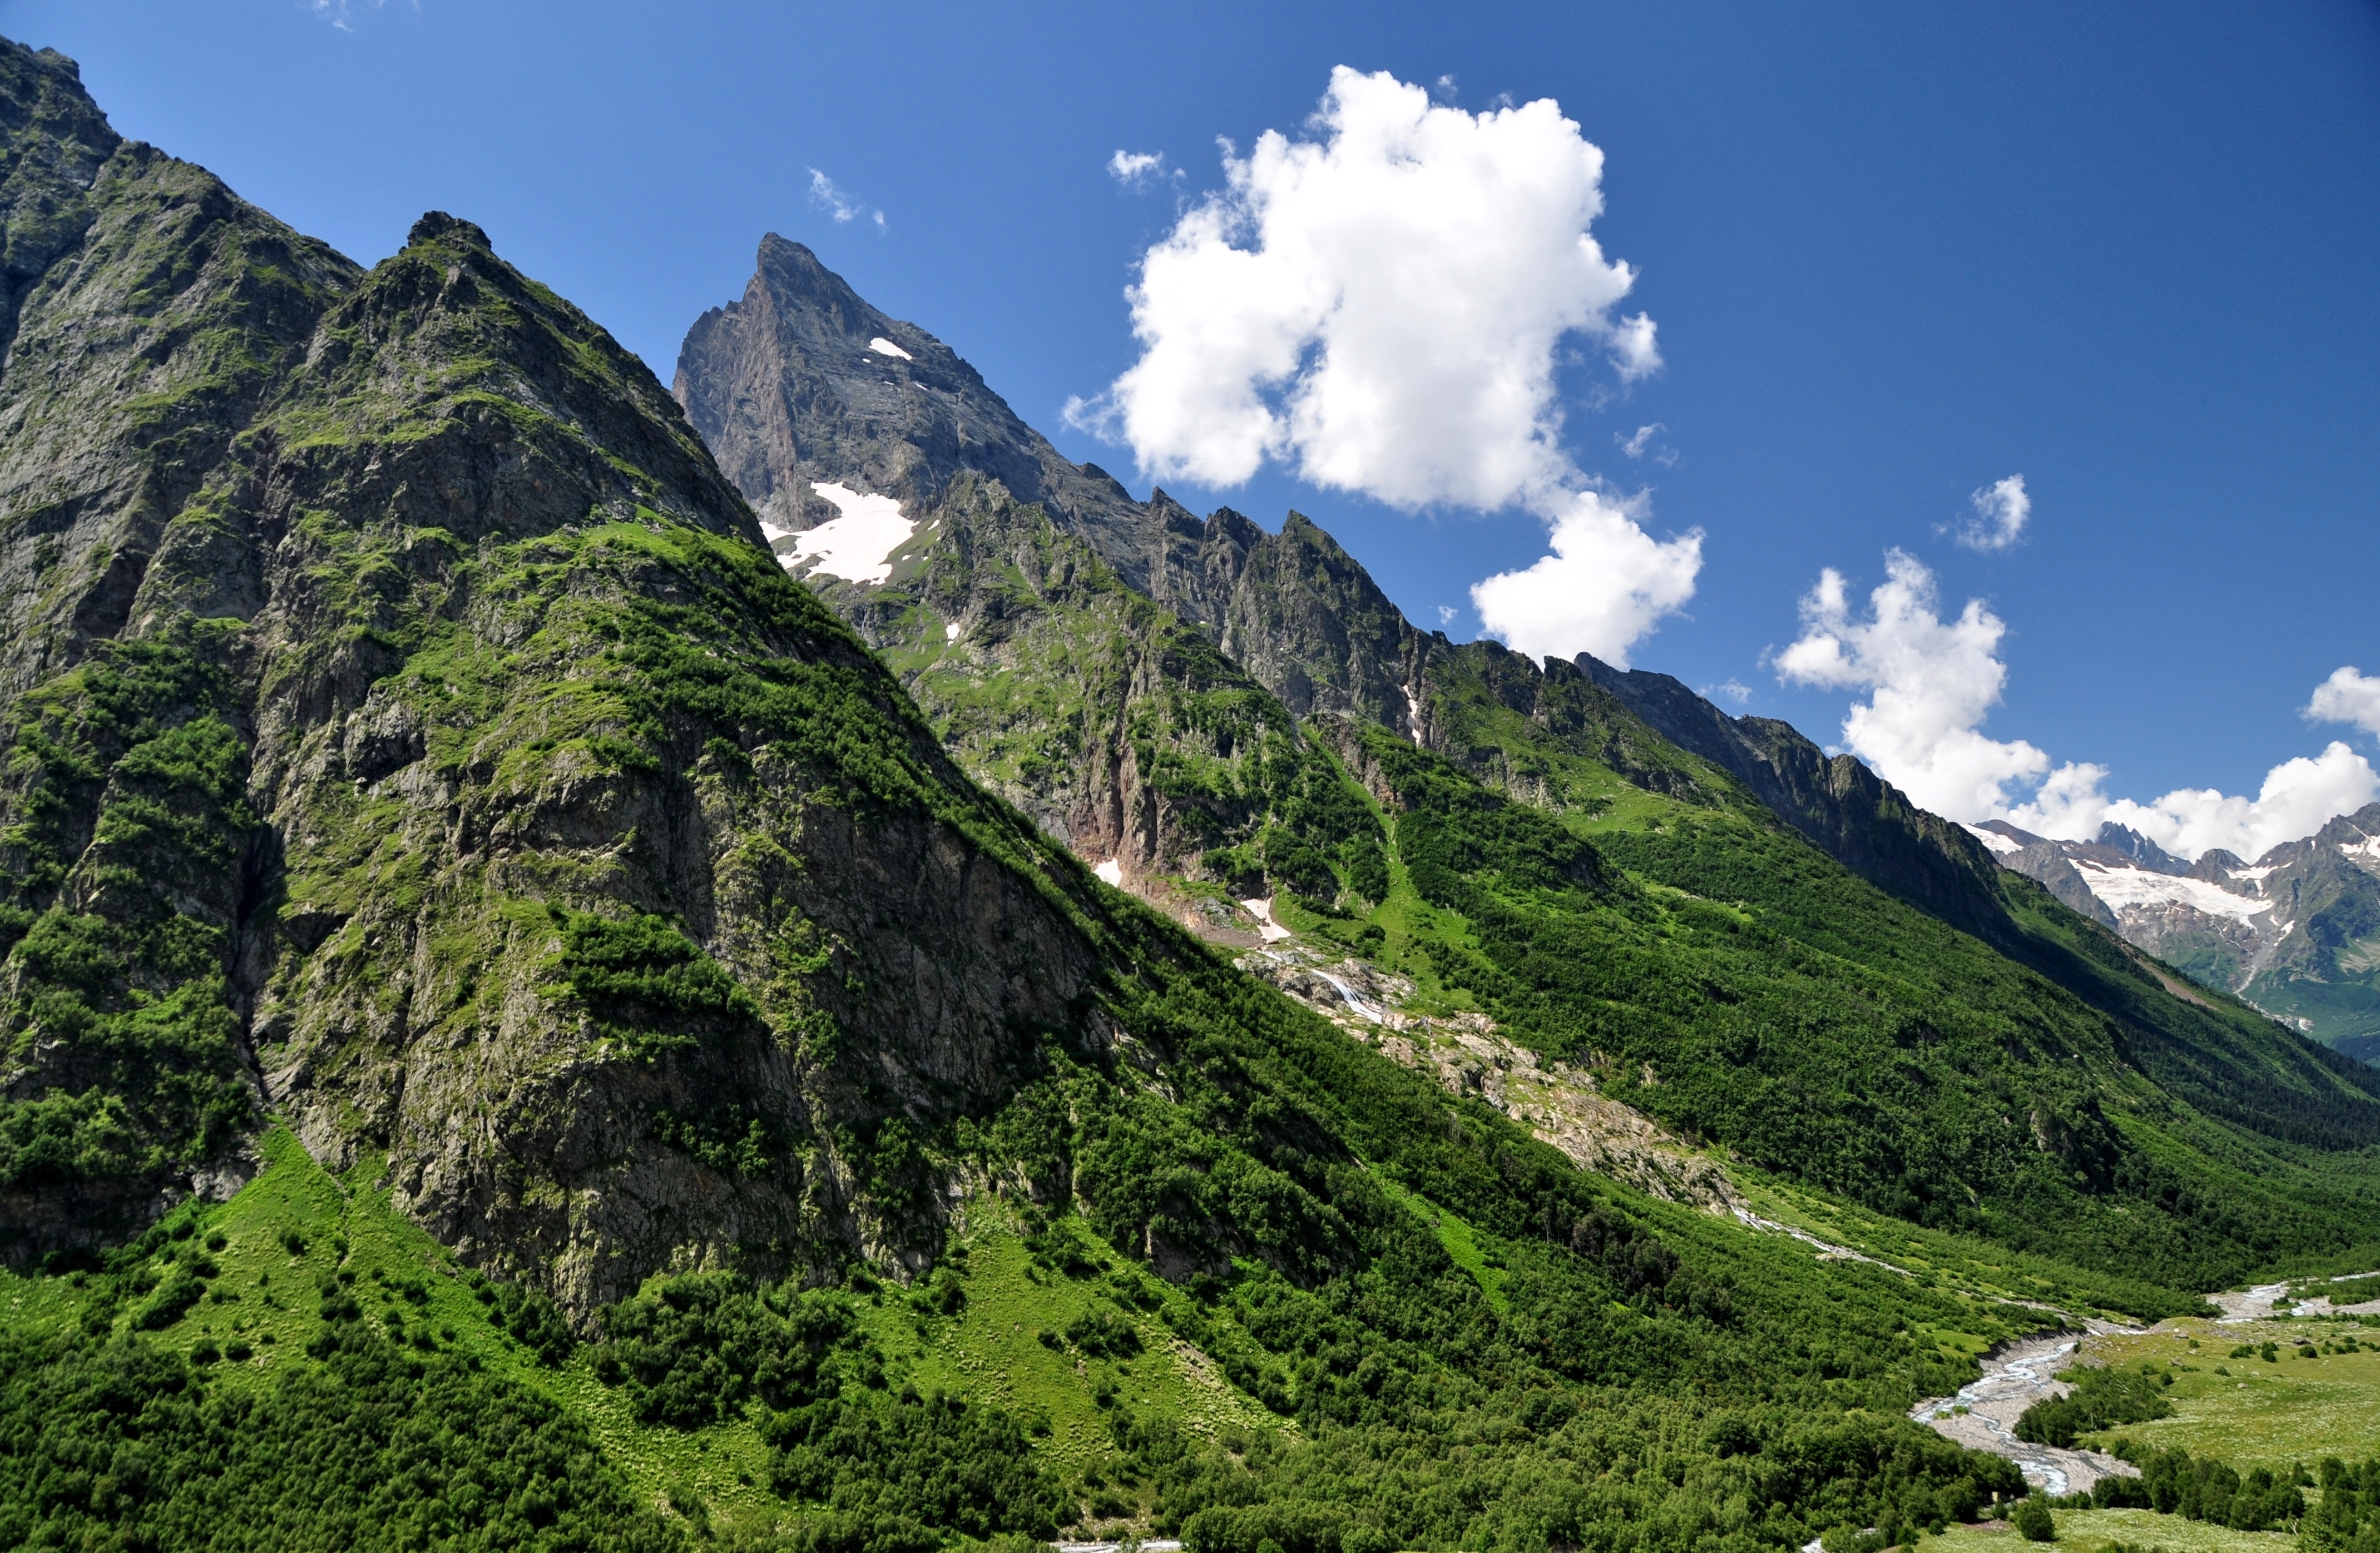 141896 descargar imagen montañas, naturaleza, hierba, cielo, cáucaso: fondos de pantalla y protectores de pantalla gratis